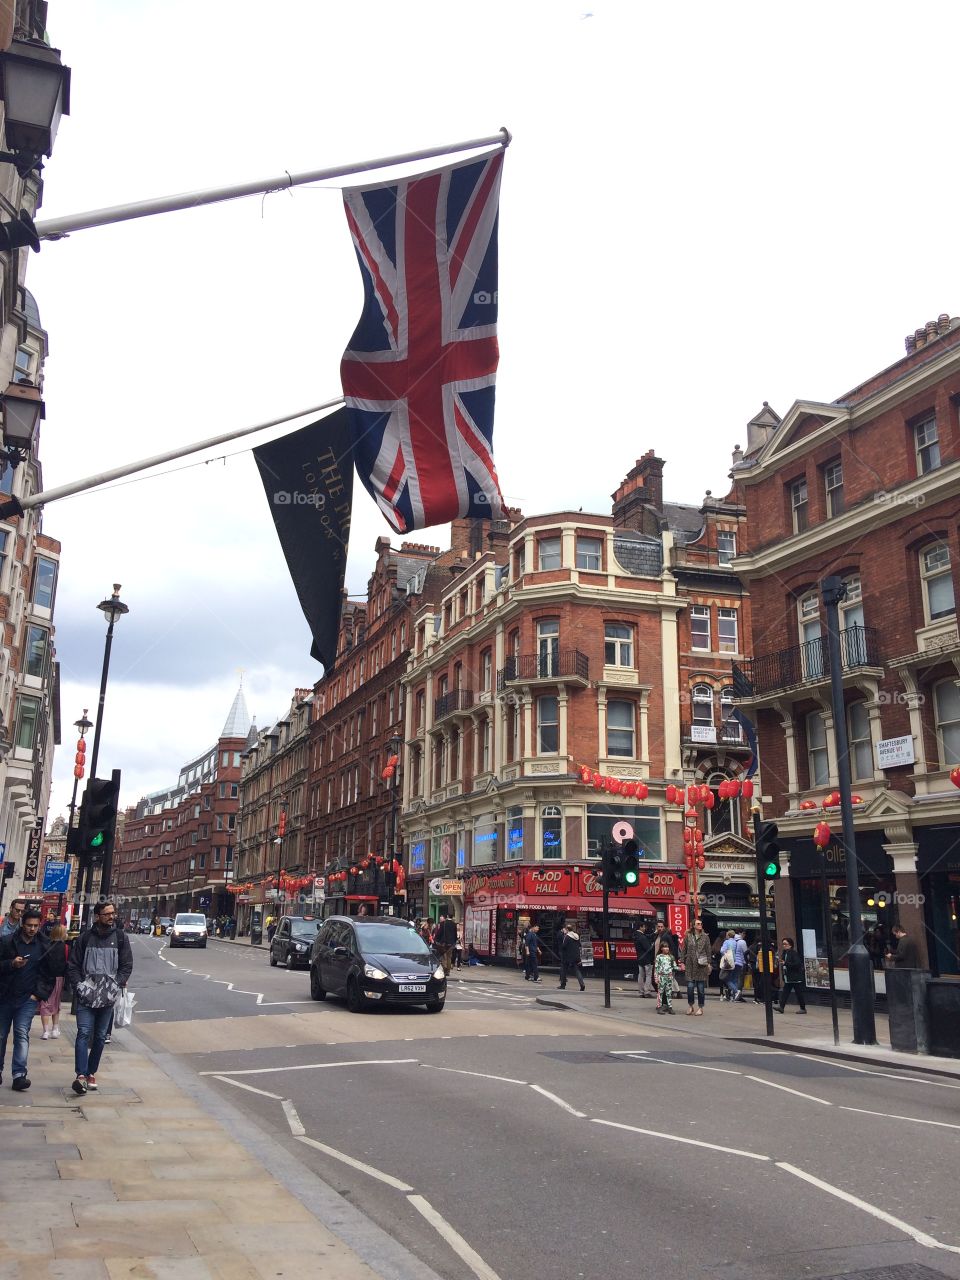 British flags surround the city